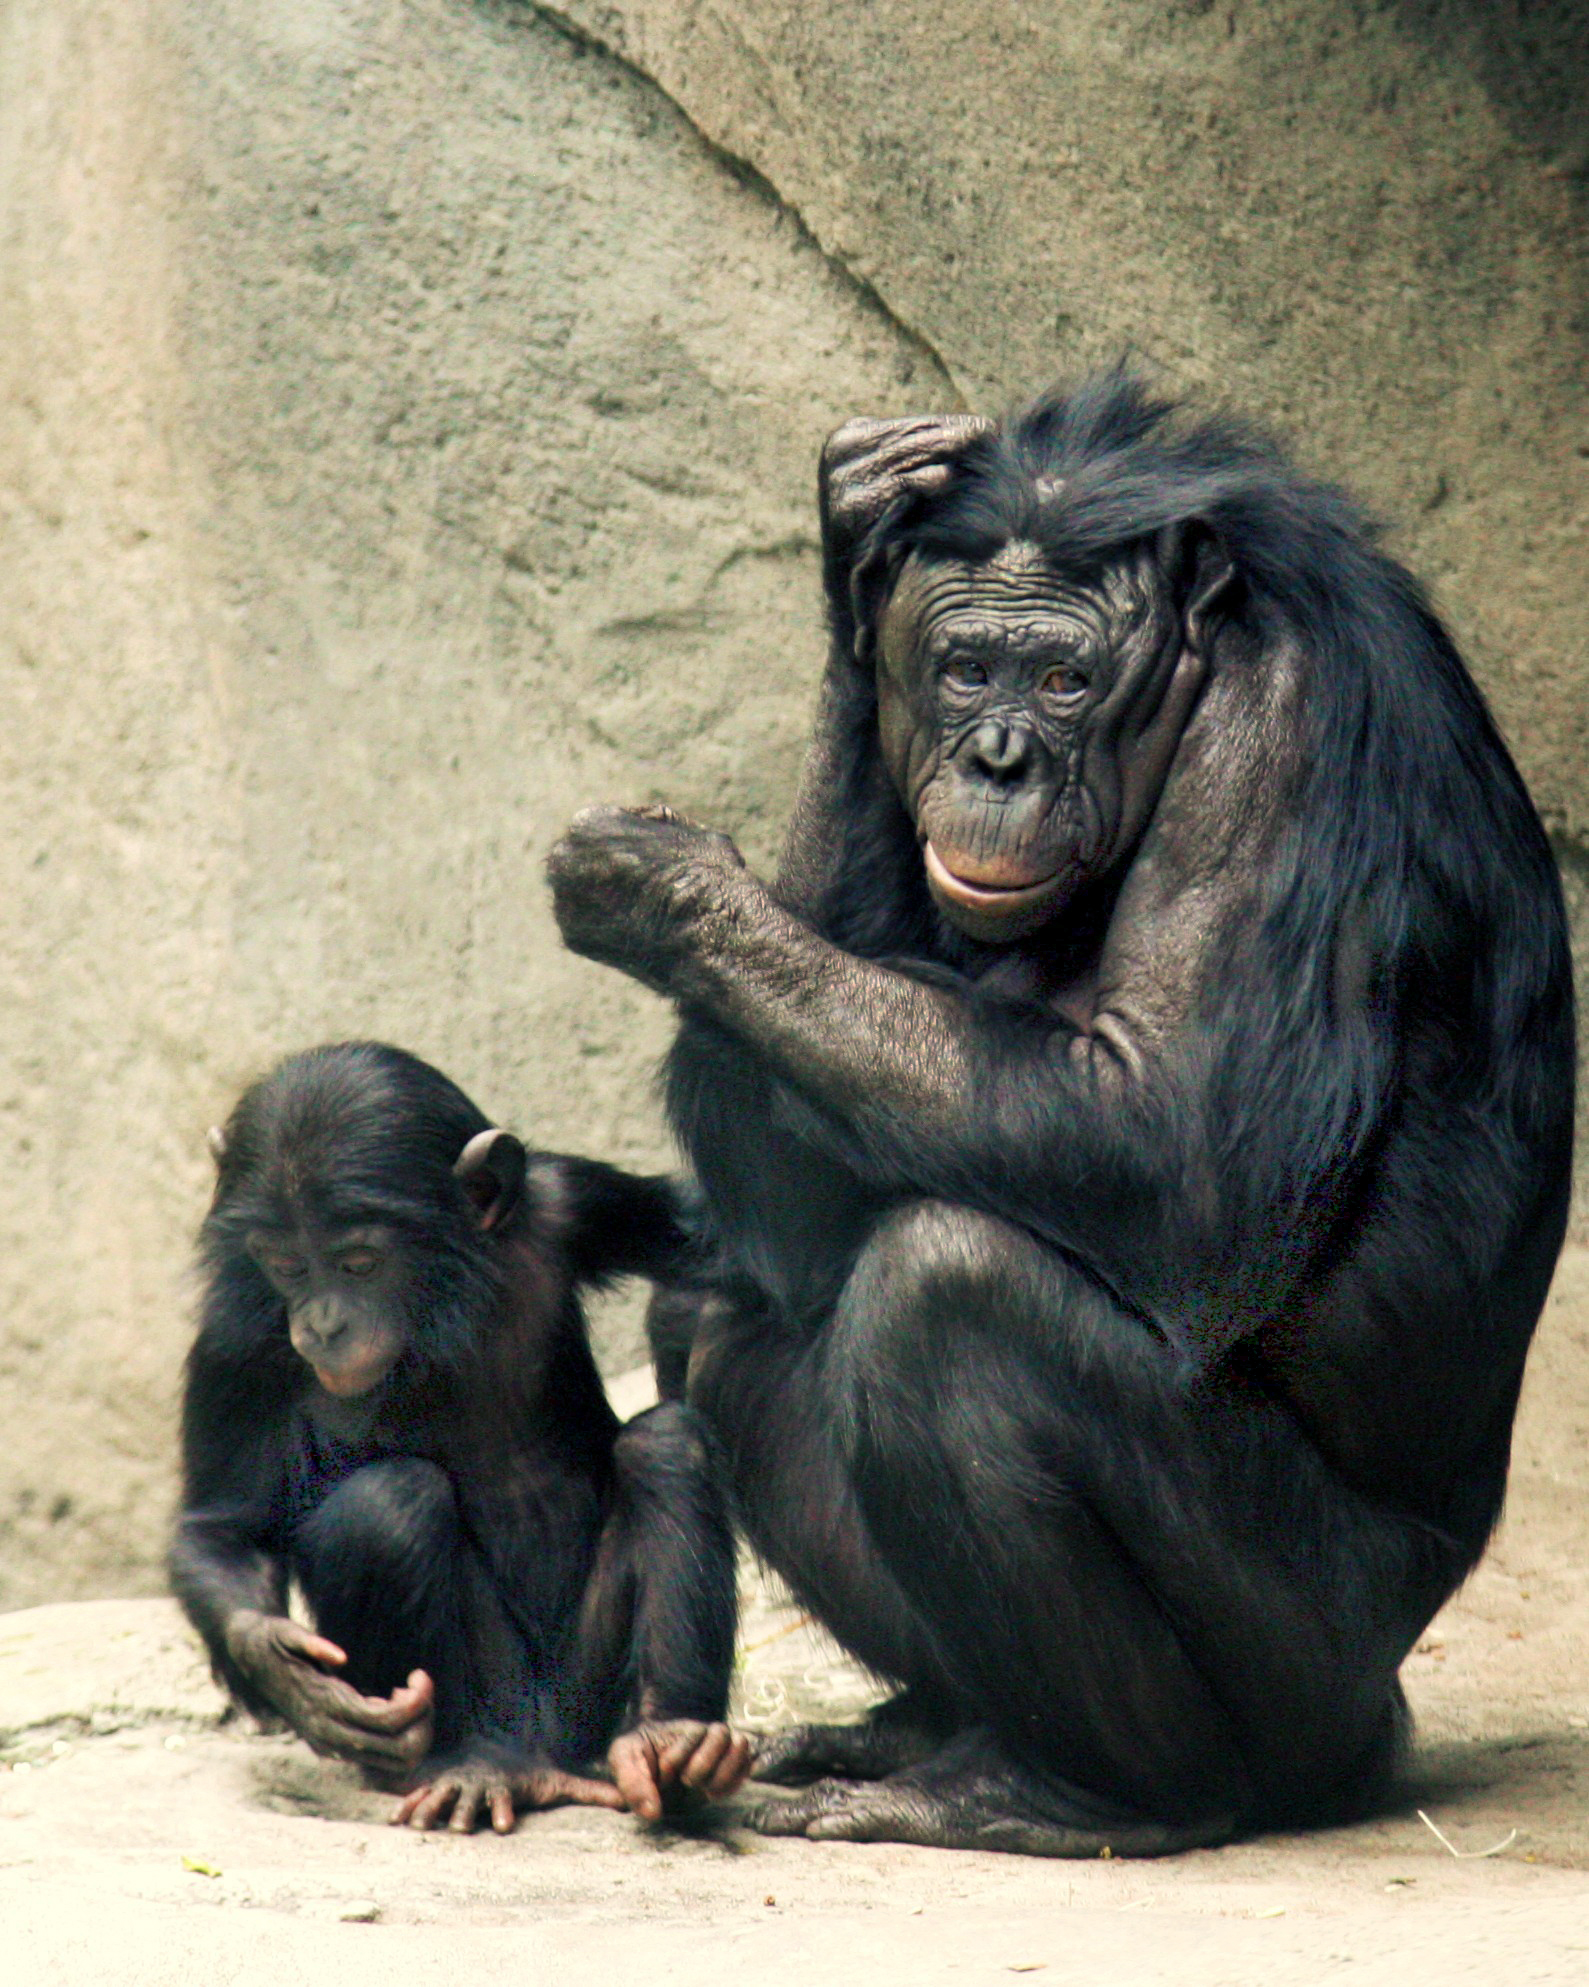 Bonobo - Wikipedia